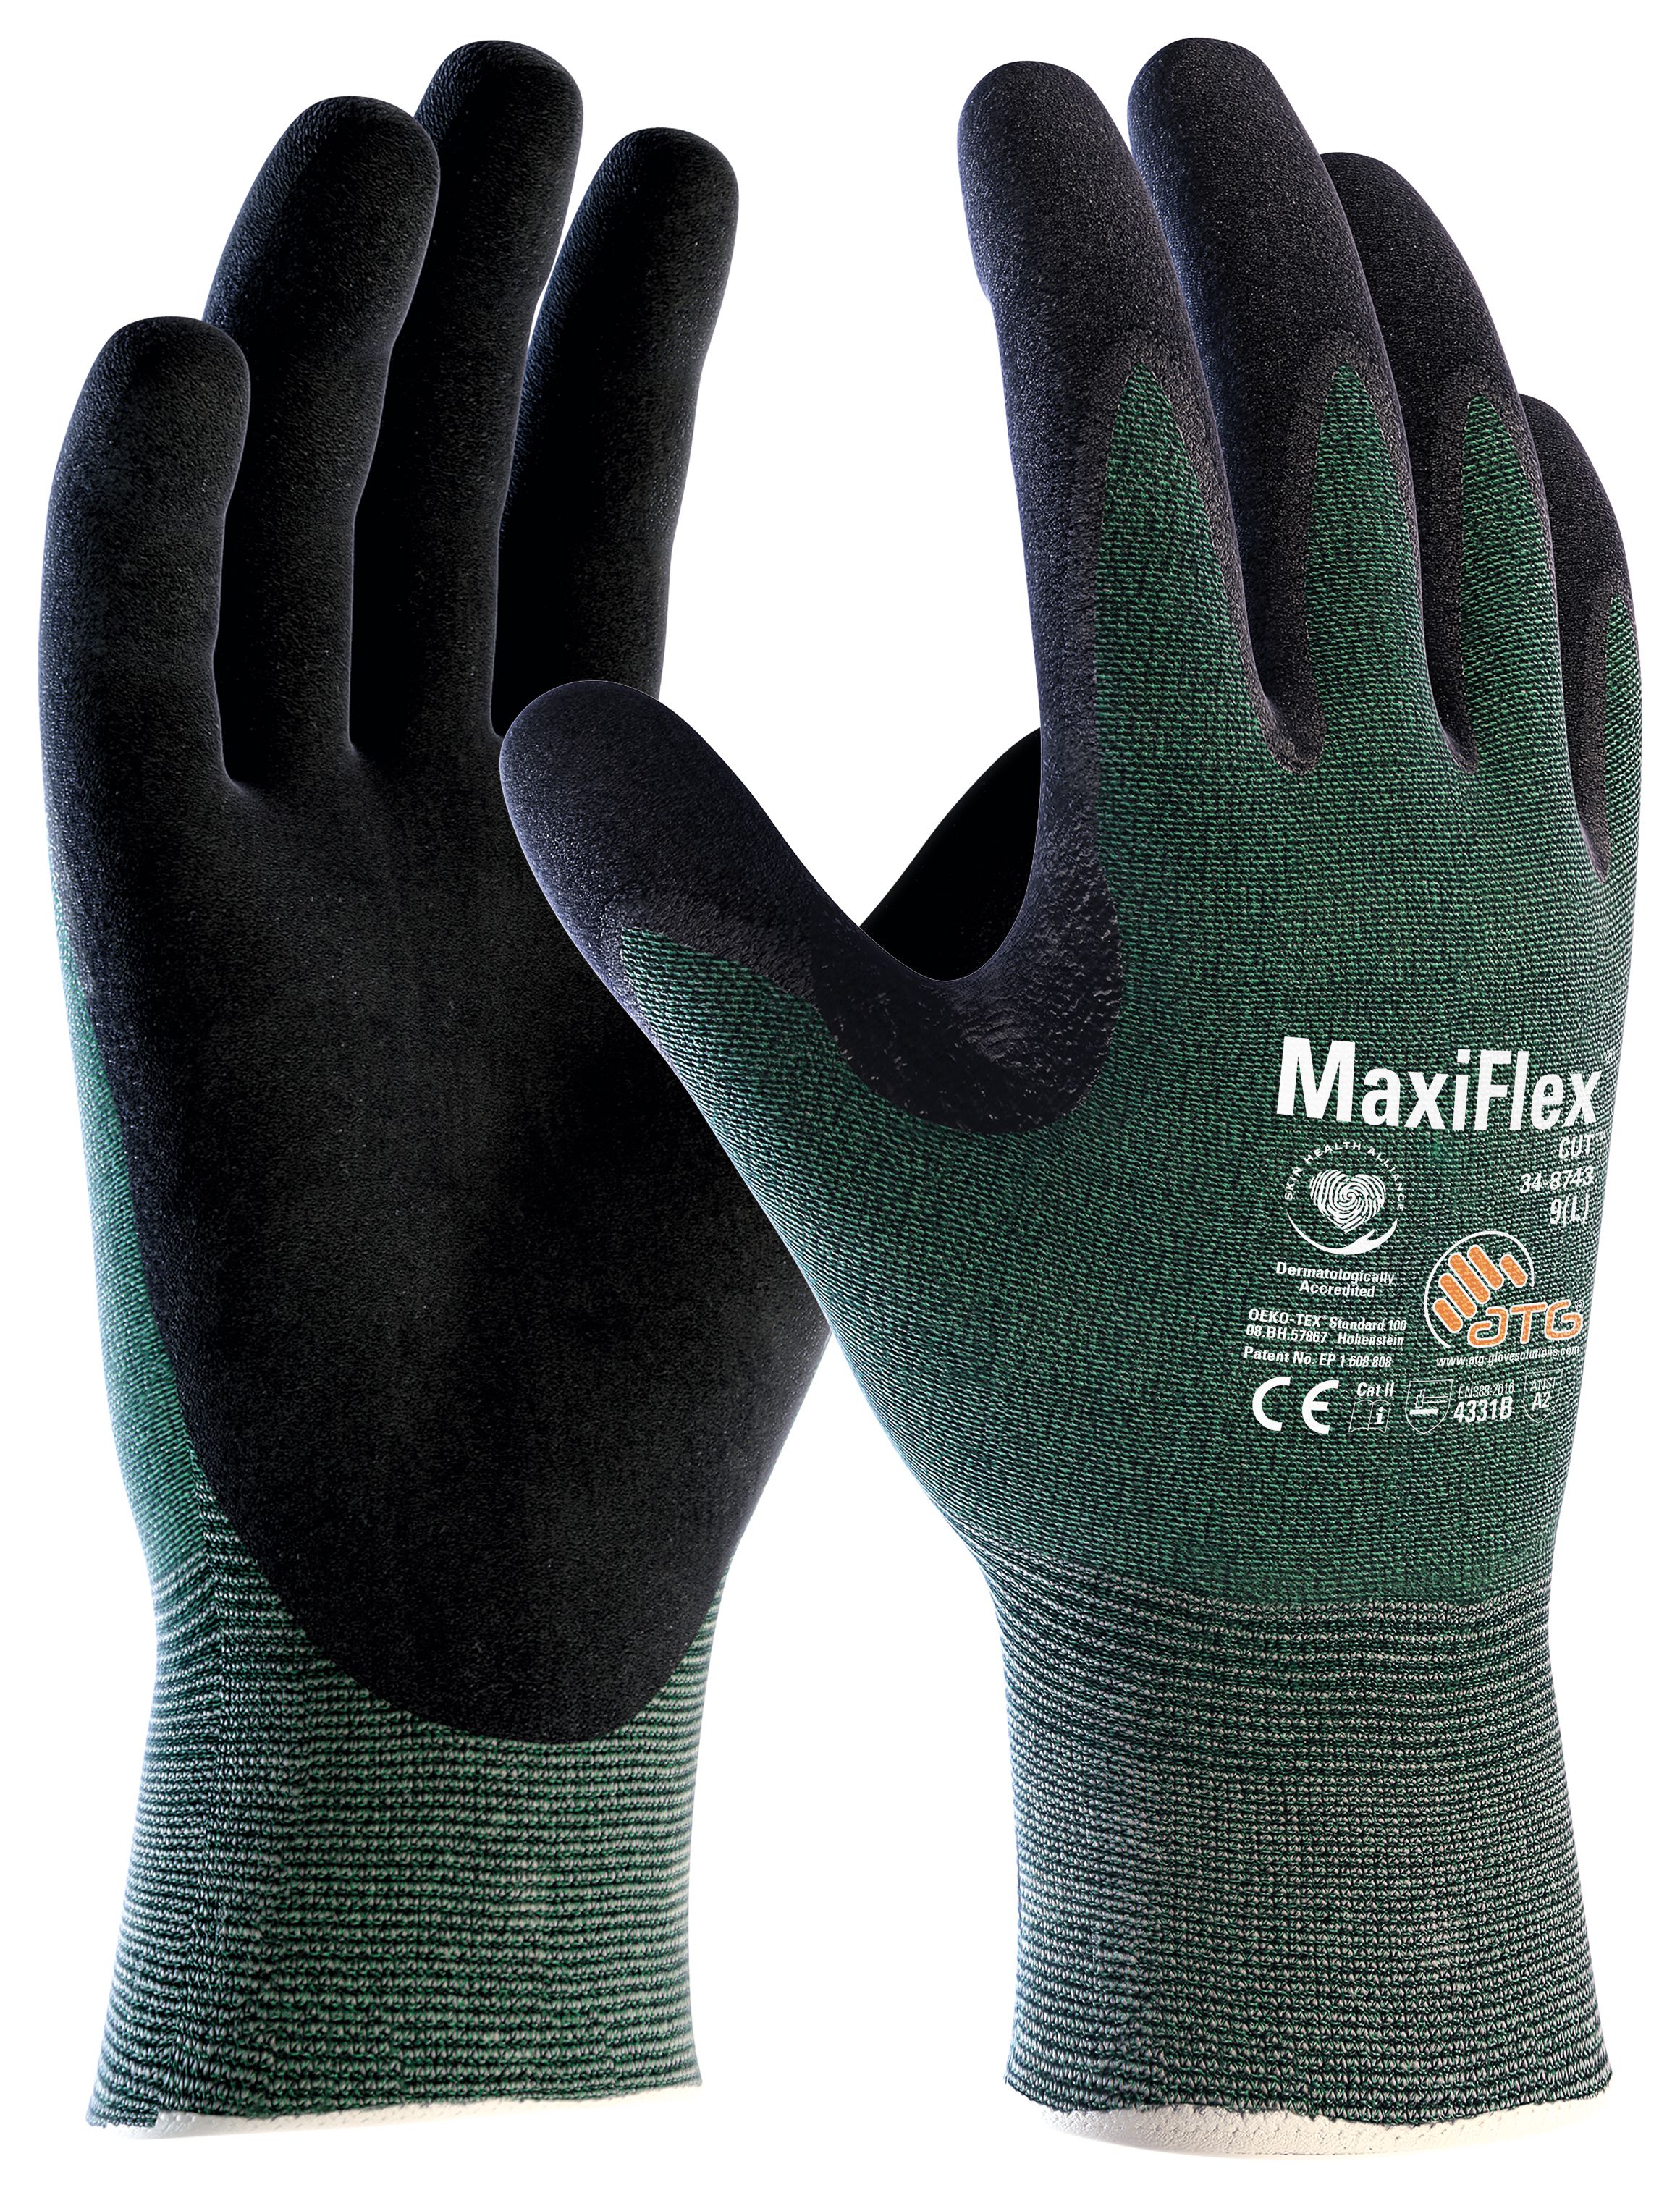 Image of ATG 34-8743 MaxiCut Level Three Work Gloves - XL Size 10